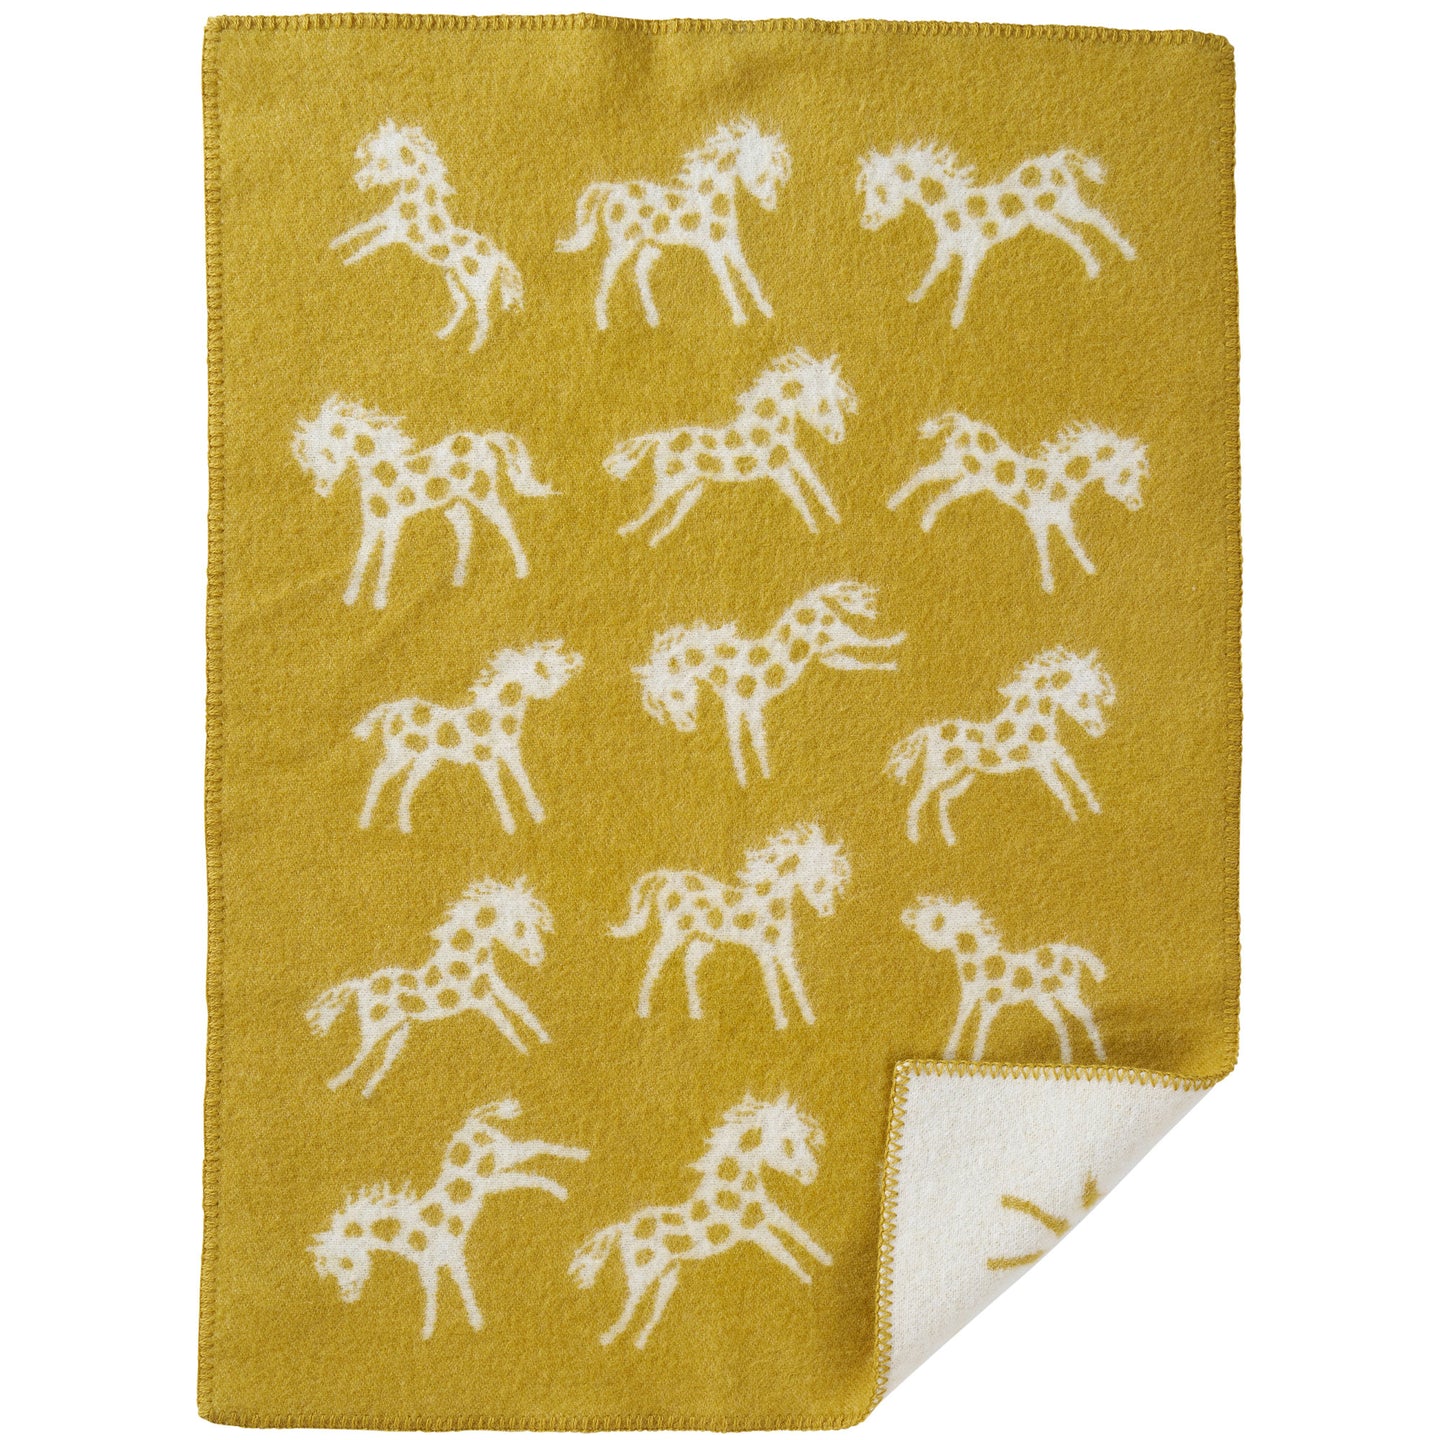 Pony Mustard Eco Lambswool Blanket 65x90cm